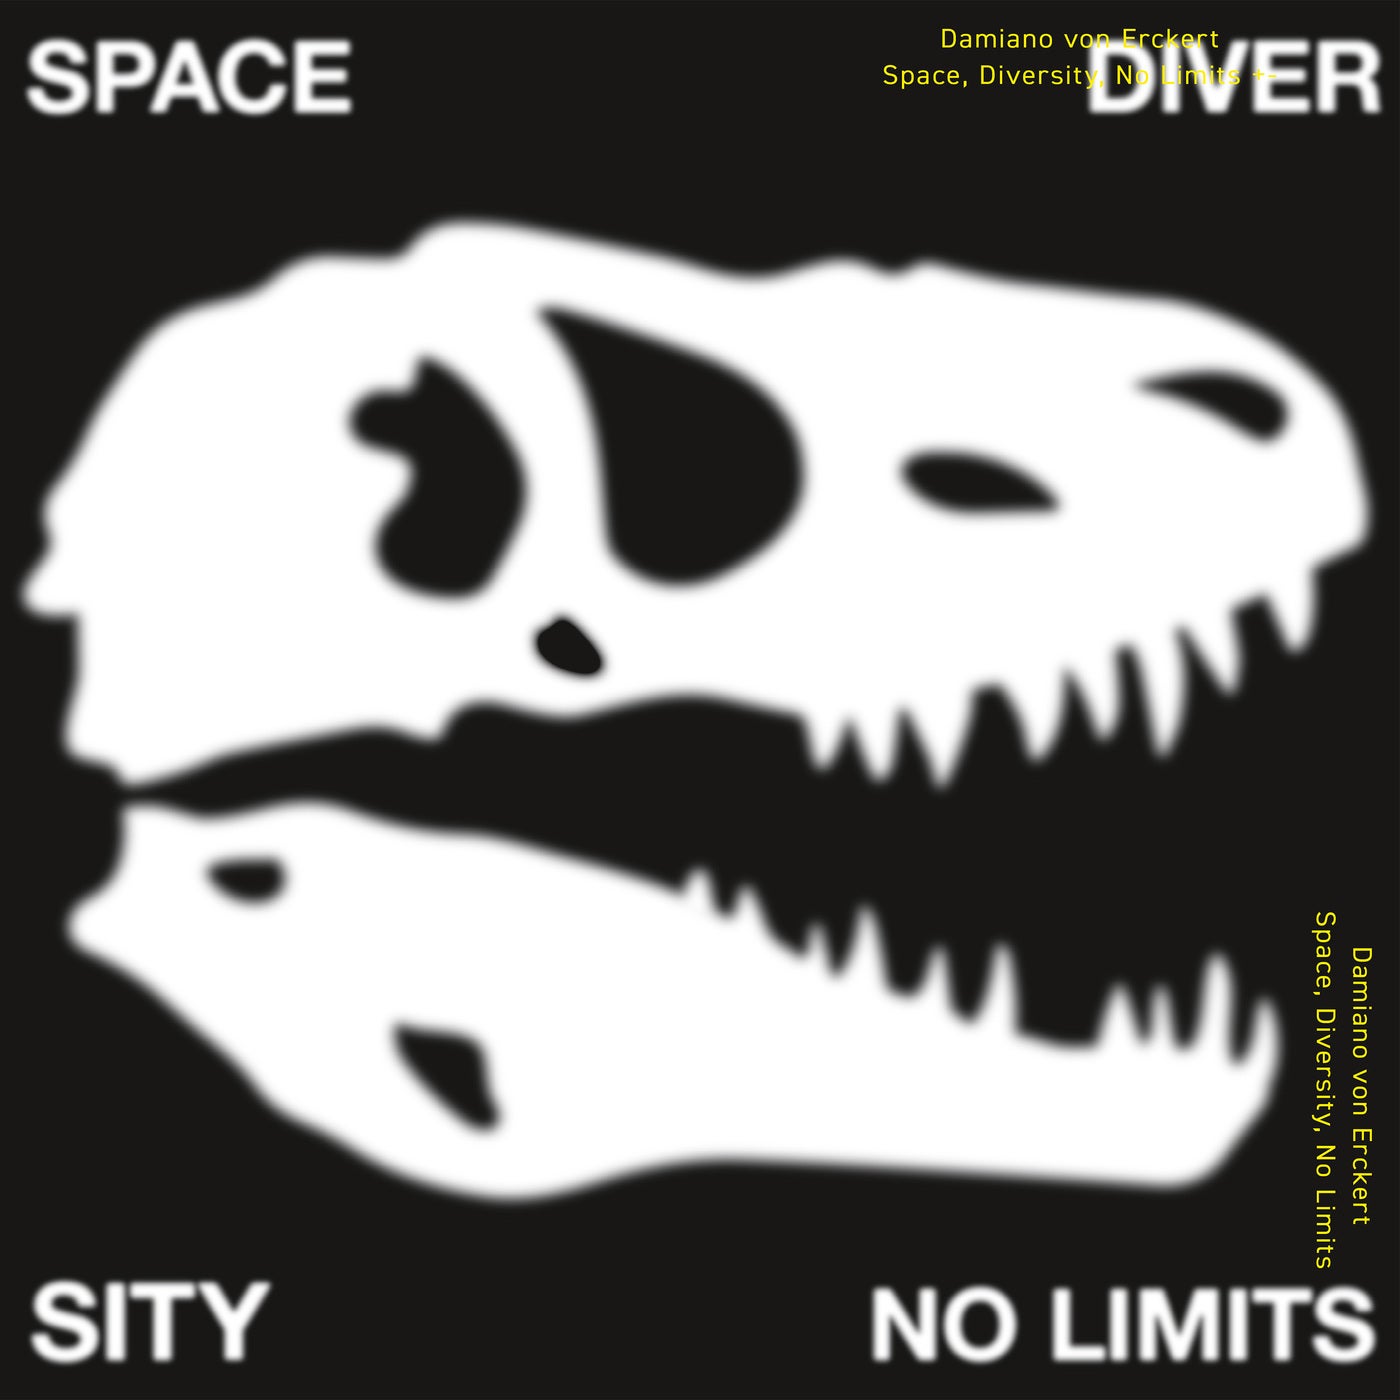 image cover: Damiano von Erckert - Space, Diversity, No Limits / PLAYRJC072D